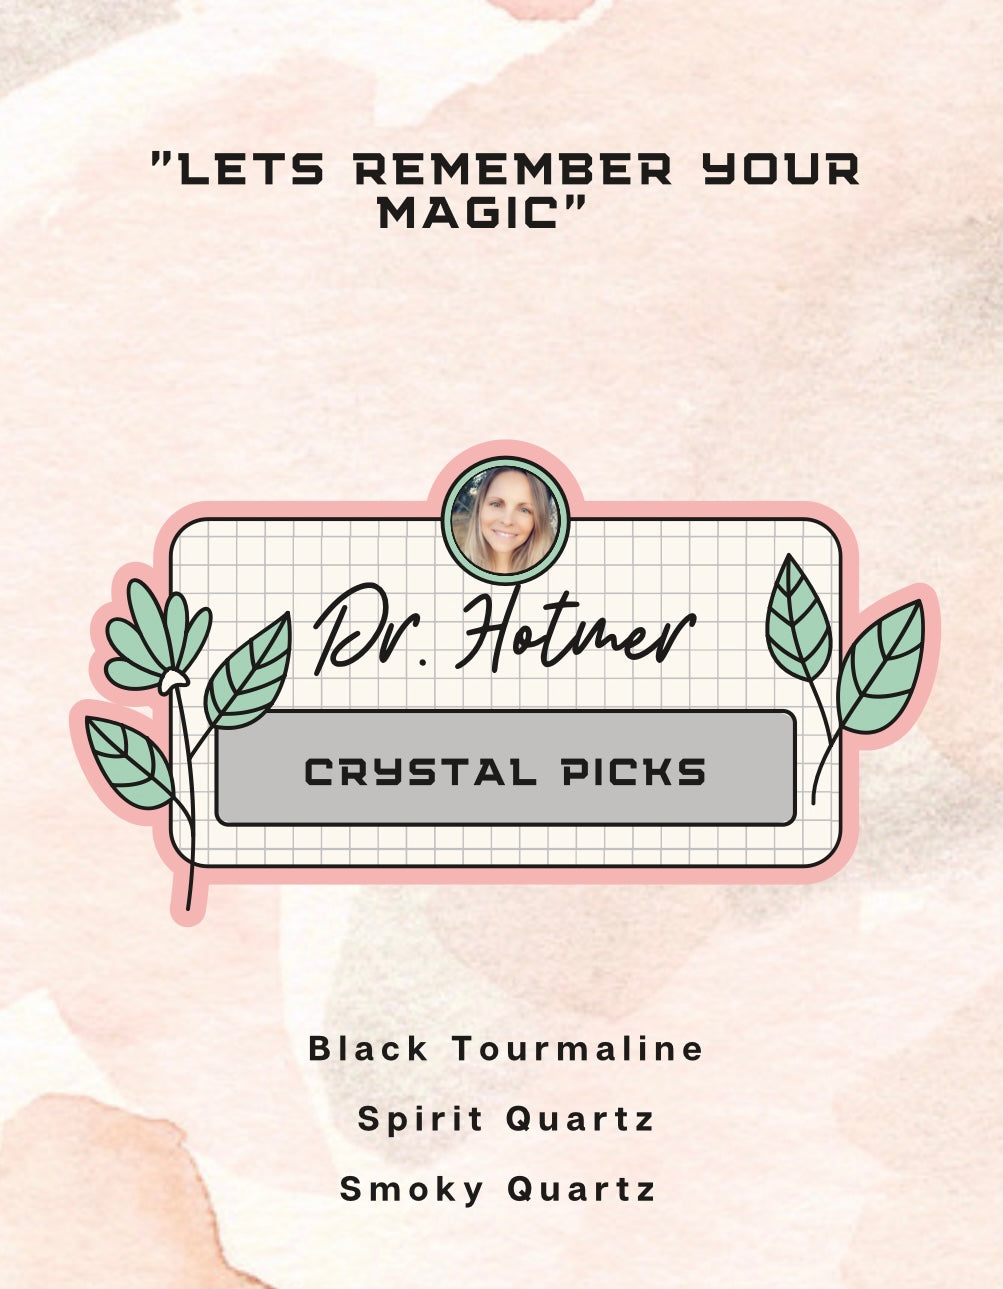 Dr. Hotmer's Crystal Picks